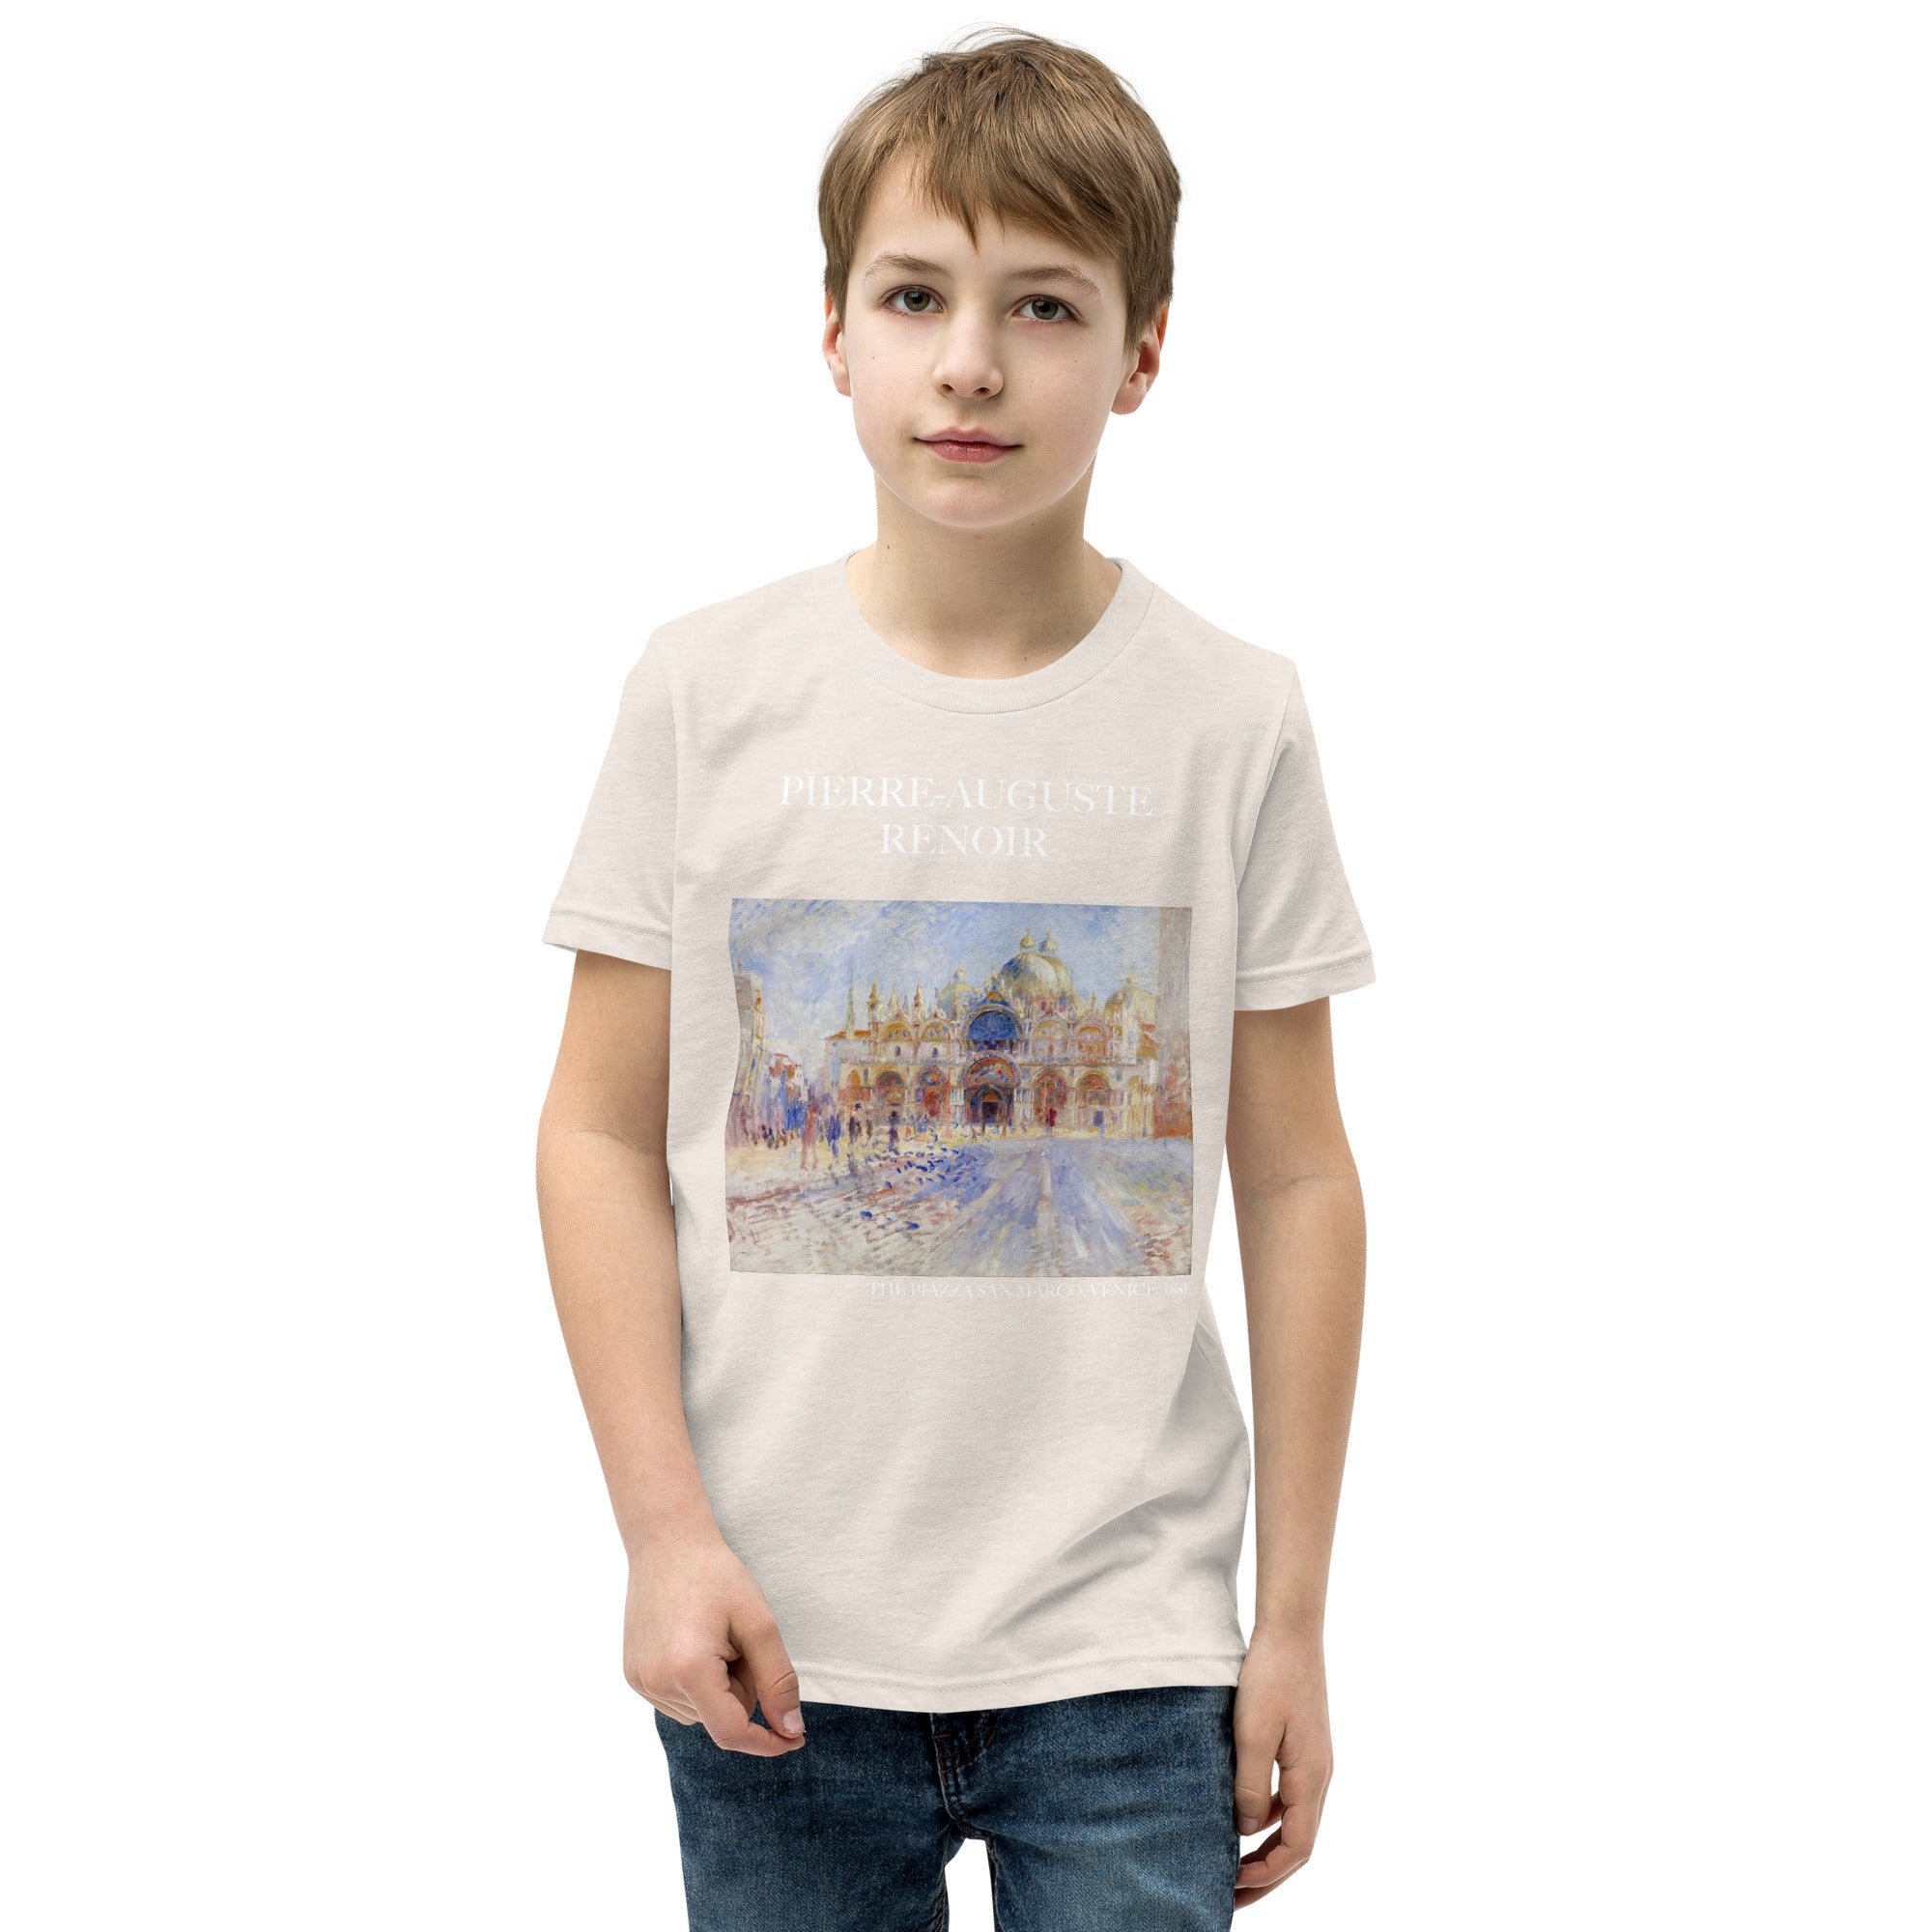 Pierre-Auguste Renoir 'The Piazza San Marco, Venice' Famous Painting Short Sleeve T-Shirt | Premium Youth Art Tee